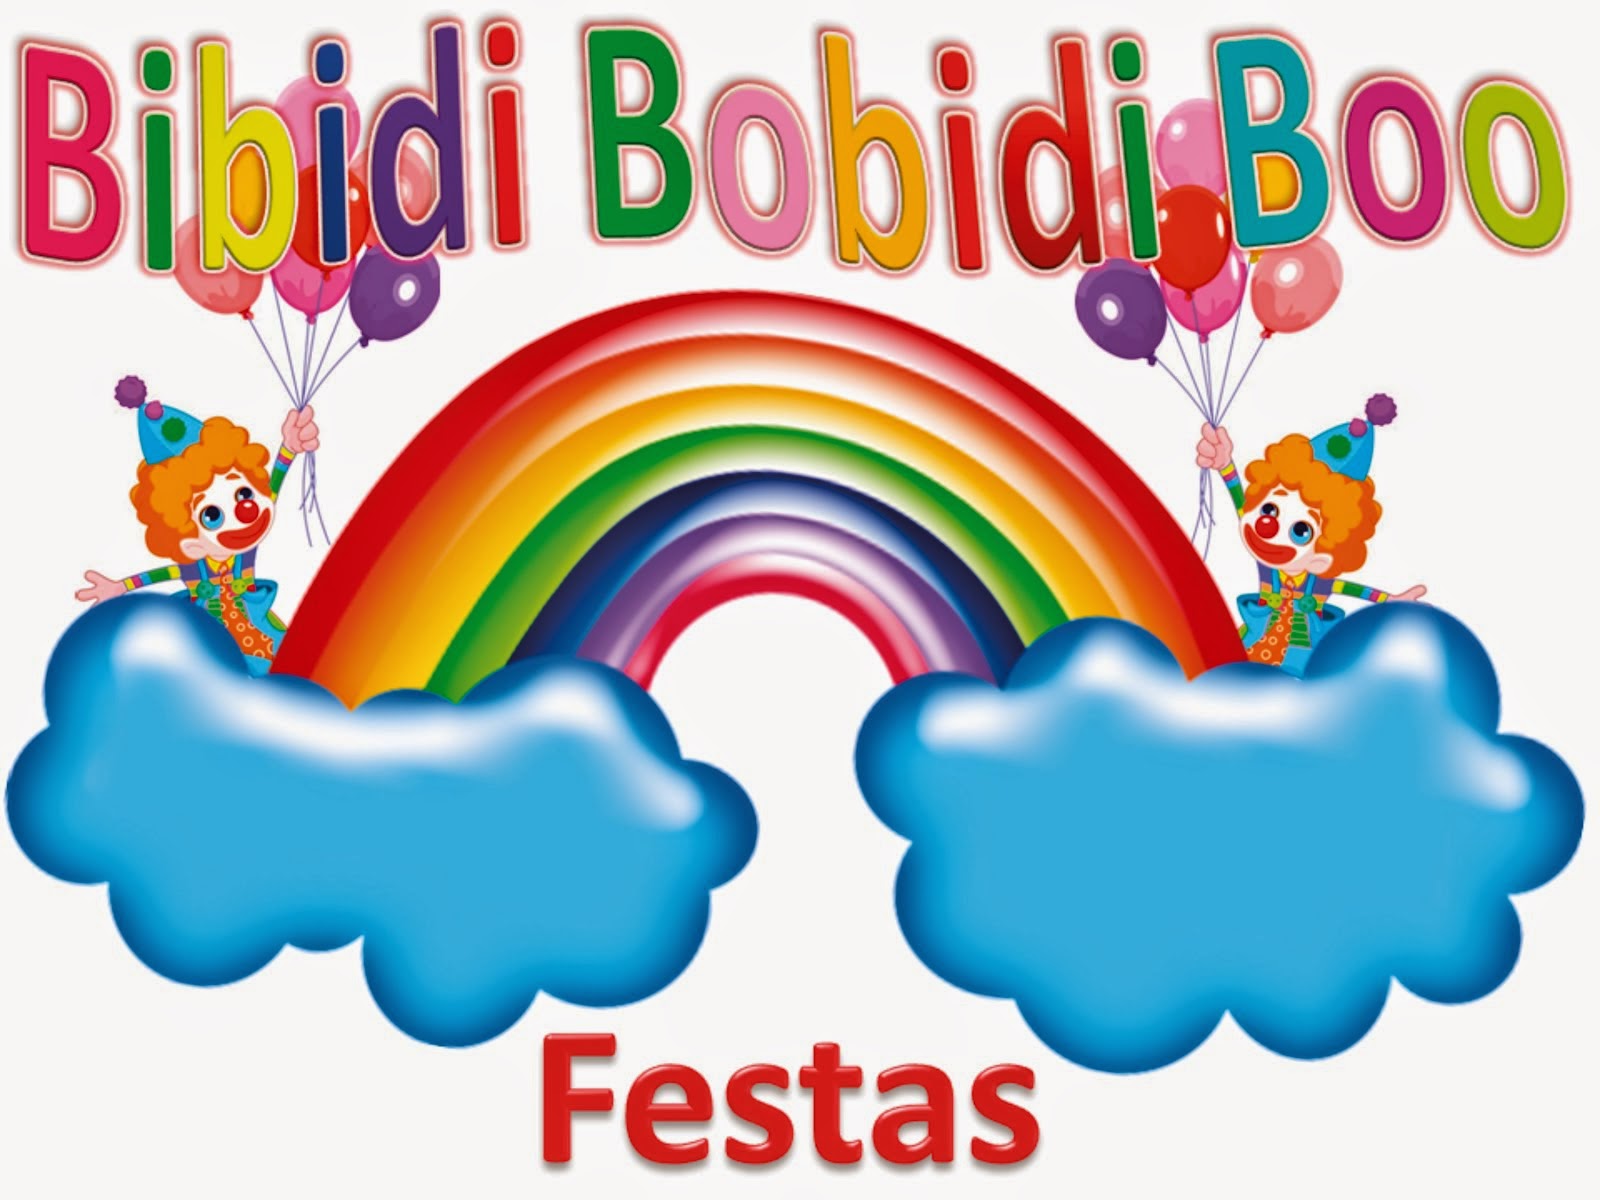 Bibidi Bobidi Boo Festas